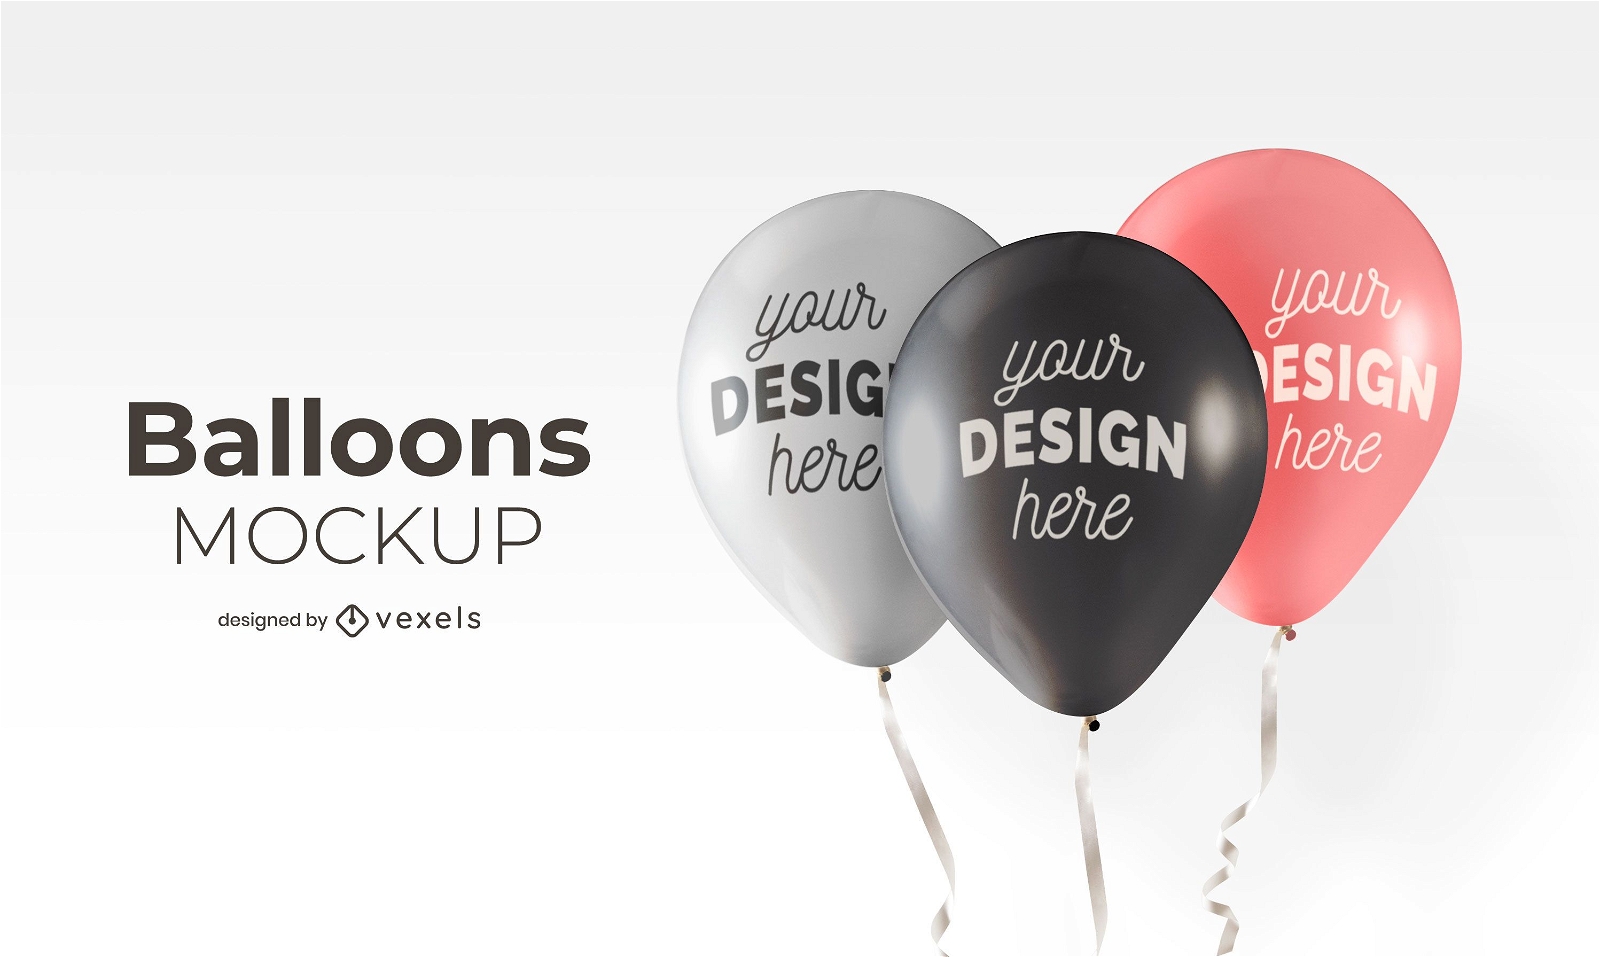 Balloons mockup design